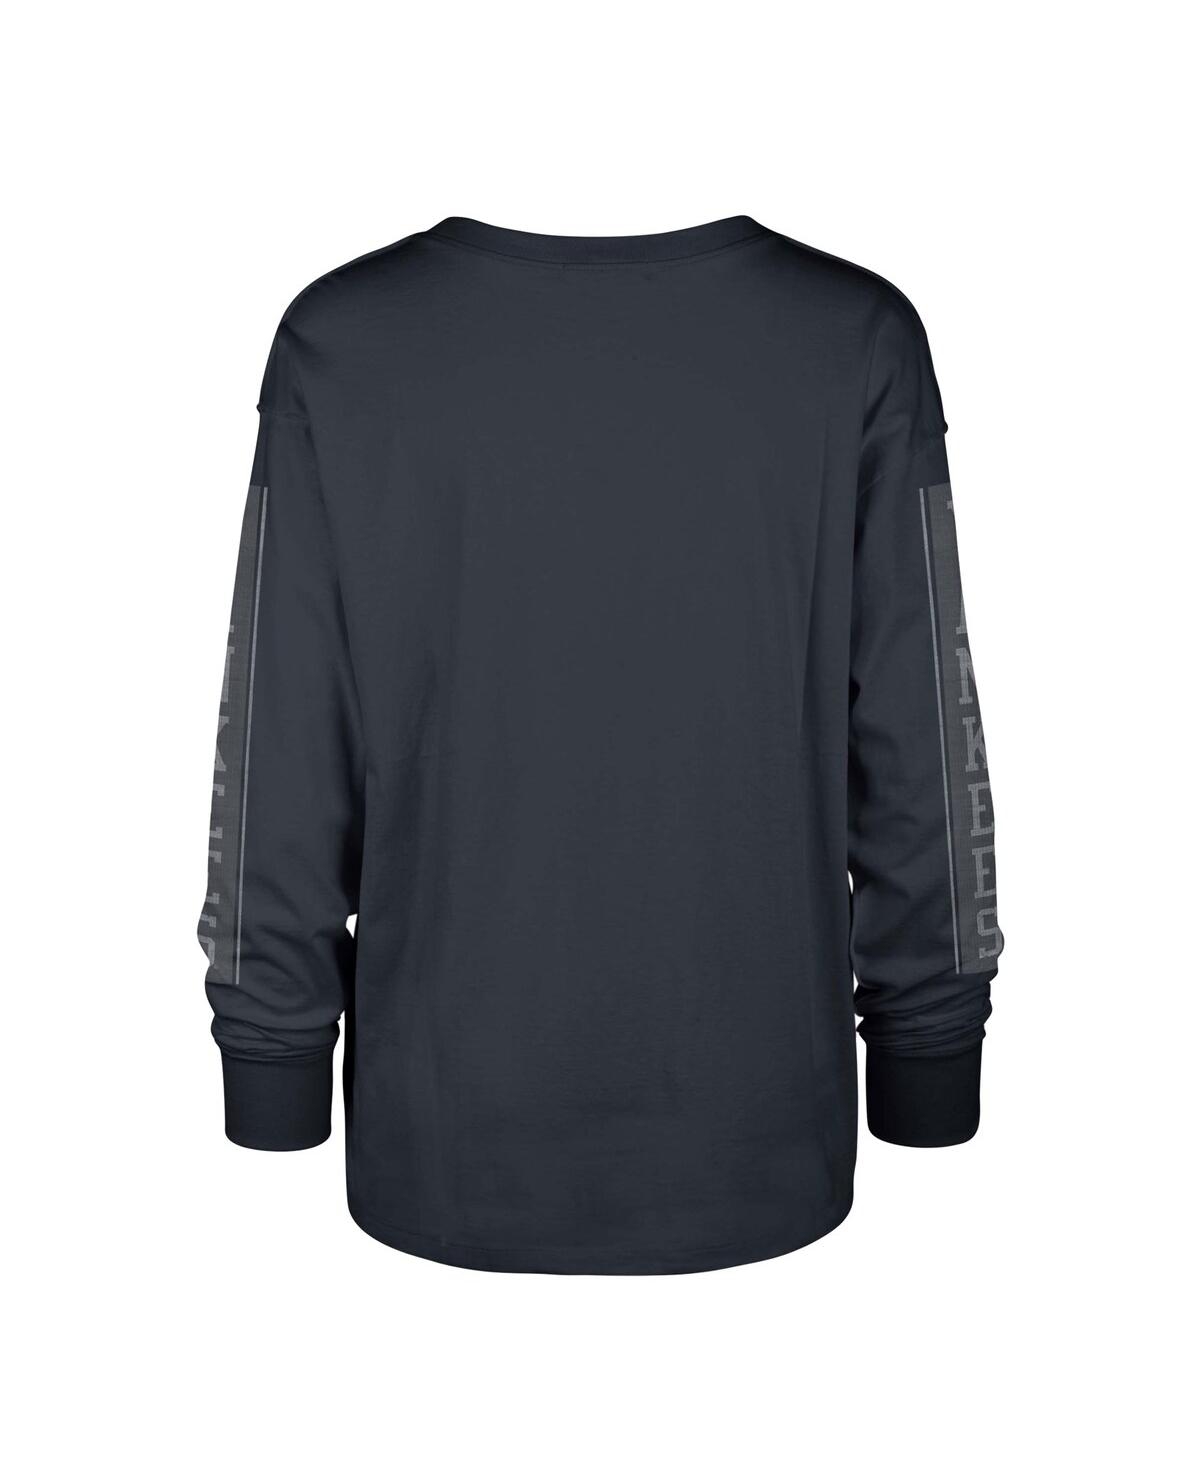 Shop 47 Brand Women's ' Navy New York Yankees Statement Long Sleeve T-shirt